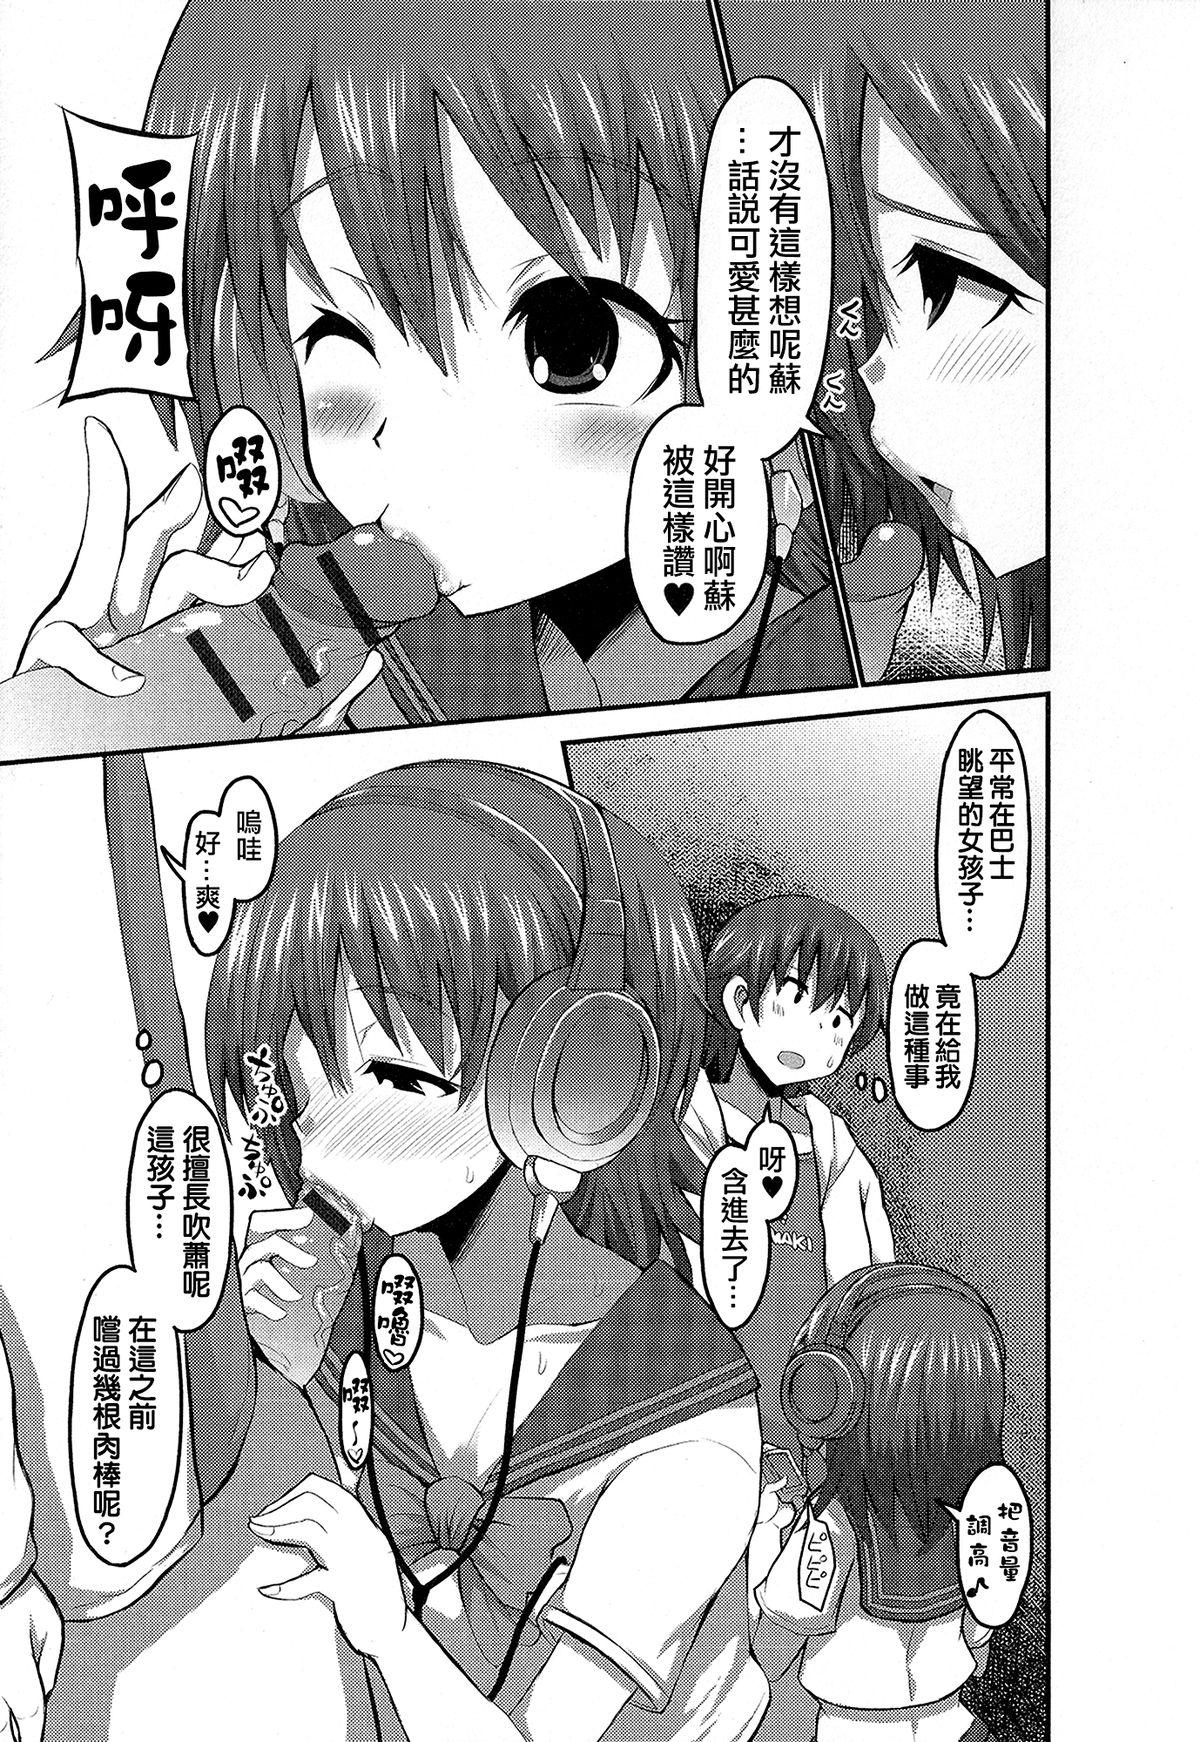 Young Kiraku in Yaro Anale - Page 5